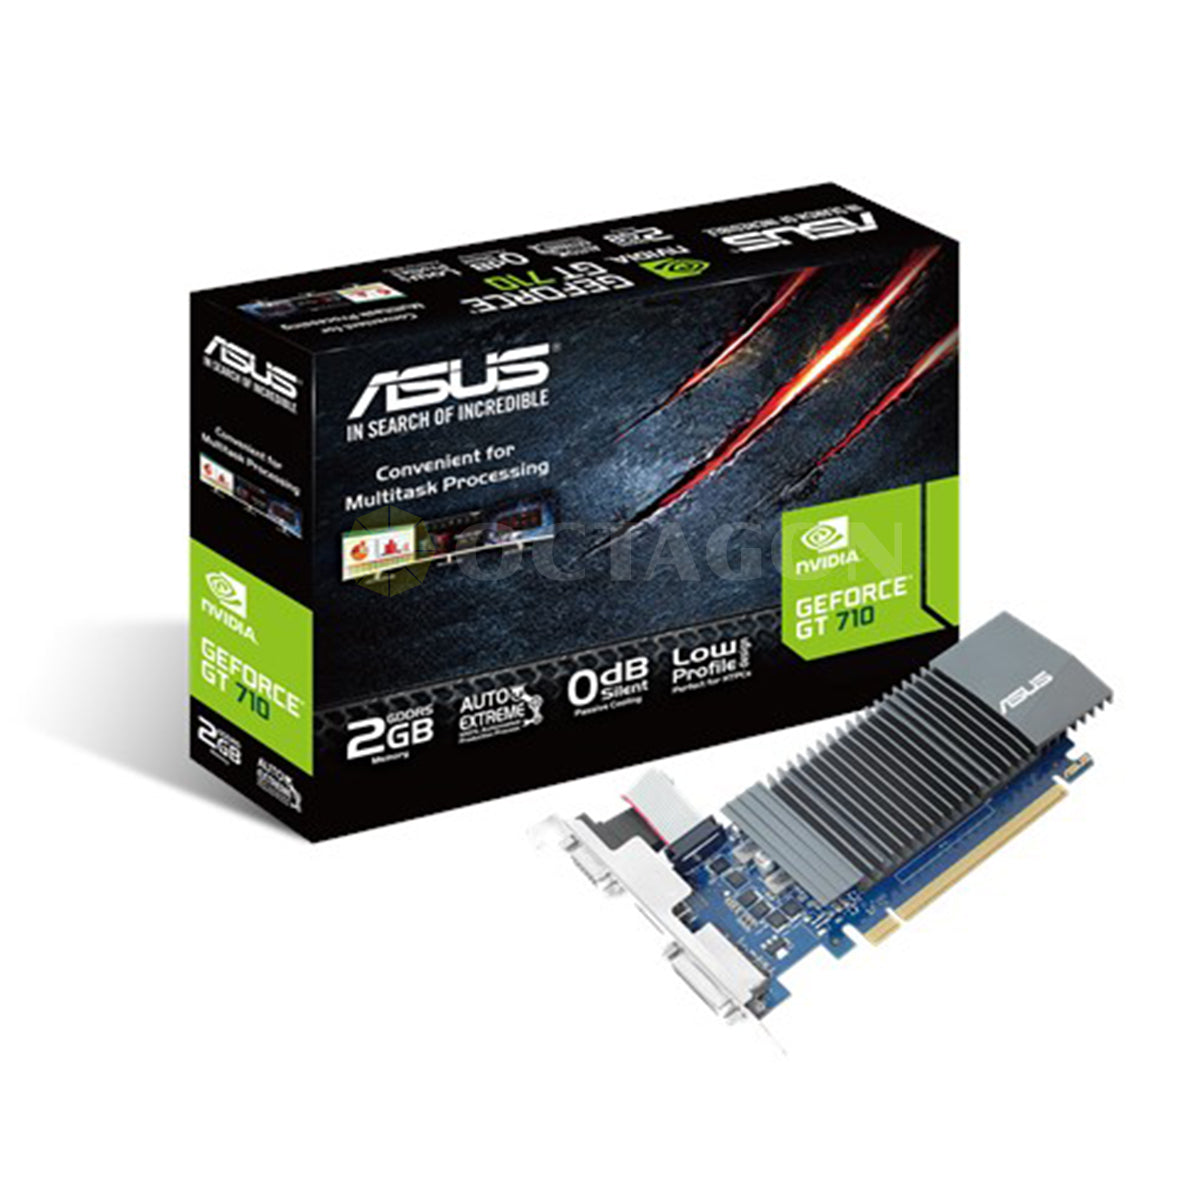 ASUS GT710 64BIT 2GB DDR5